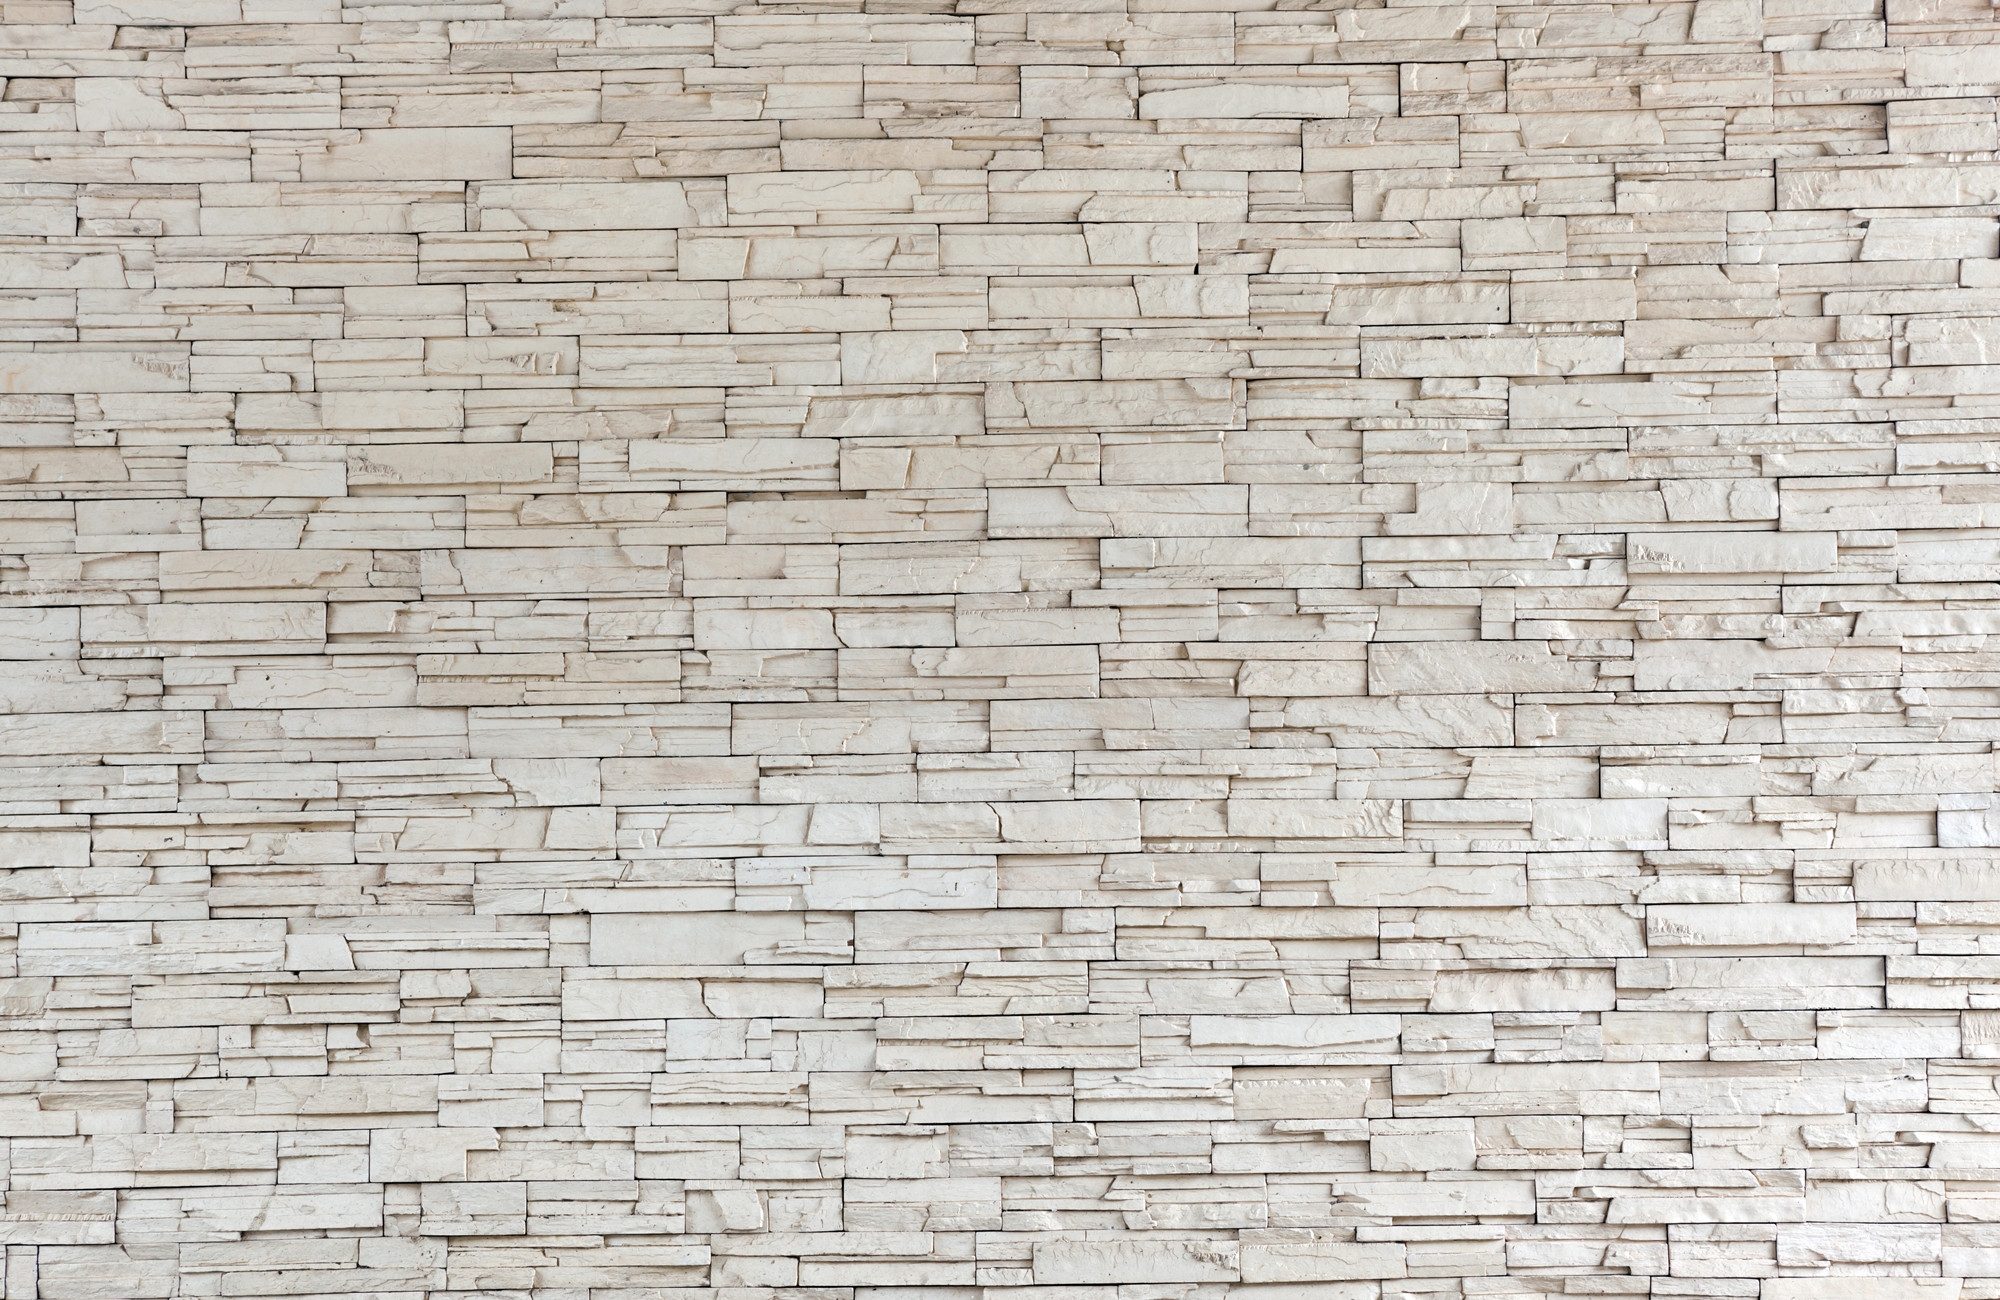 Papermoon Fototapete "NEU" PREMIUM-VLIES-Tapete, leicht strukturiert, Seidenmatt, restlos trocken abziehbar, (komplett Set inkl. Шпалериkleister, 5658), Stone wall